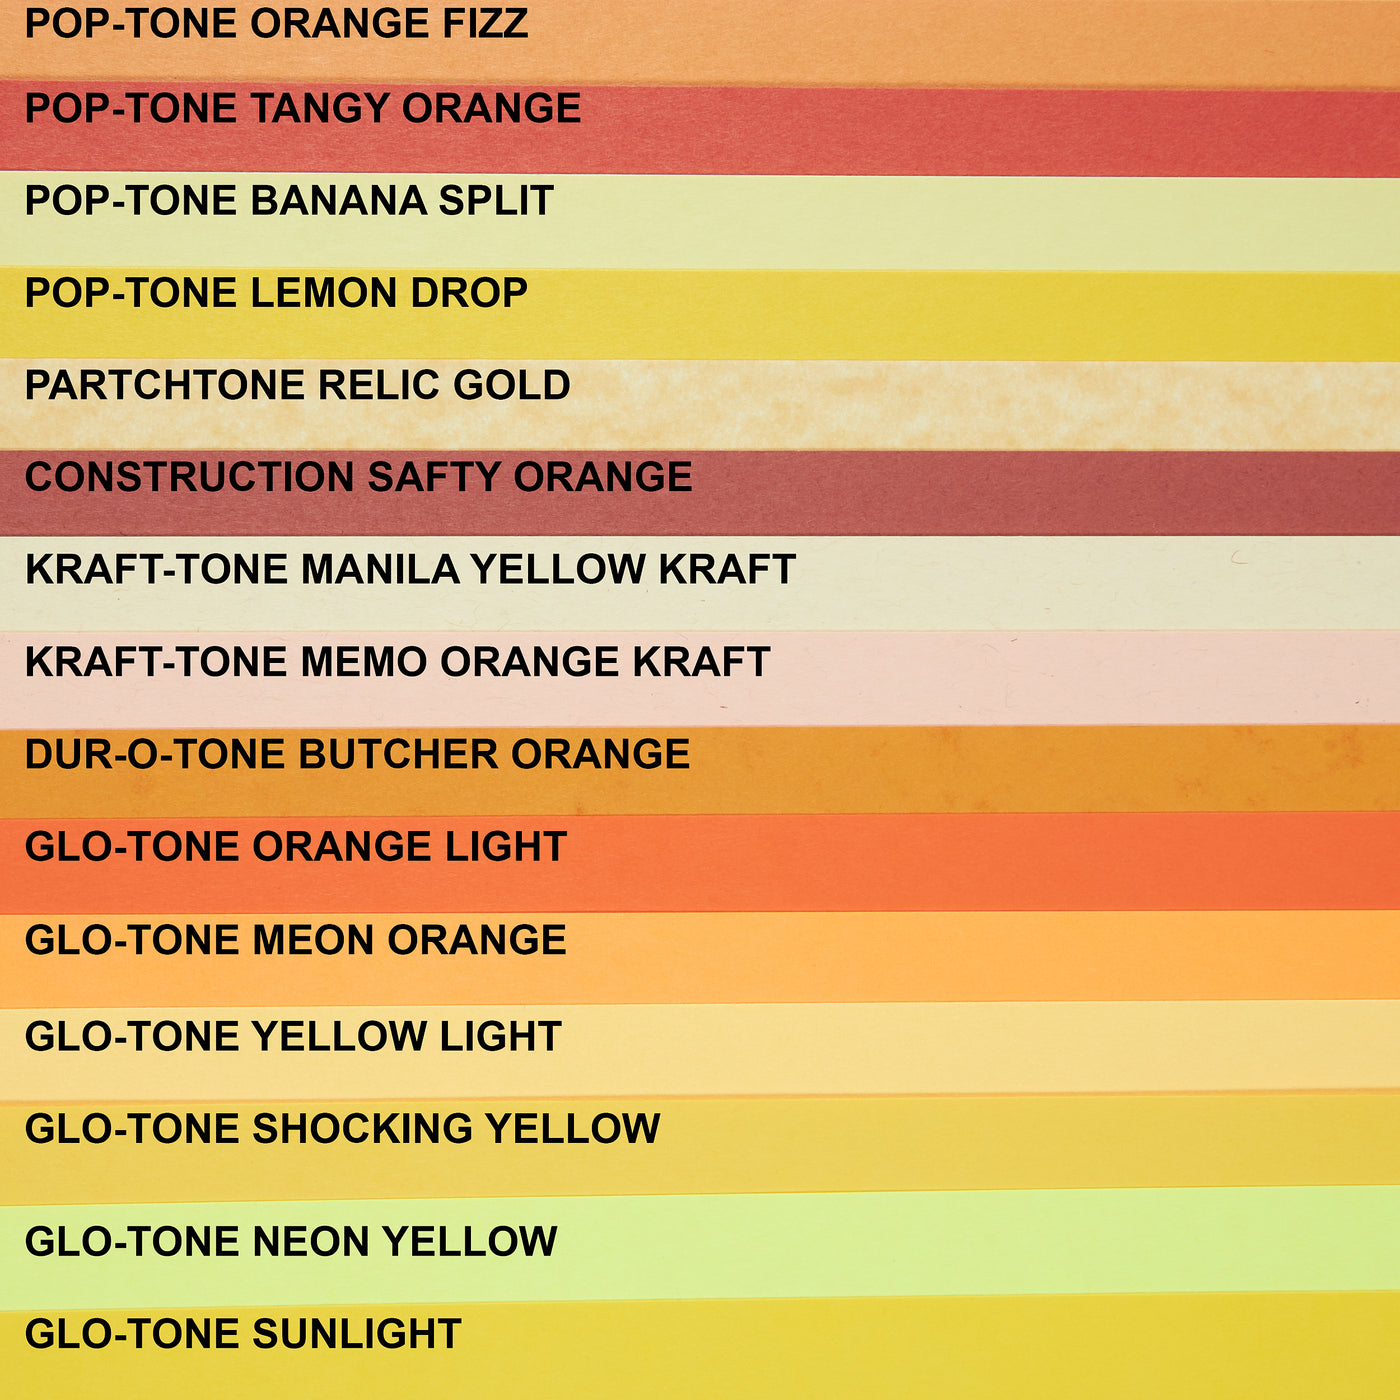 Yellow Light Envelope (Glo-Tone)